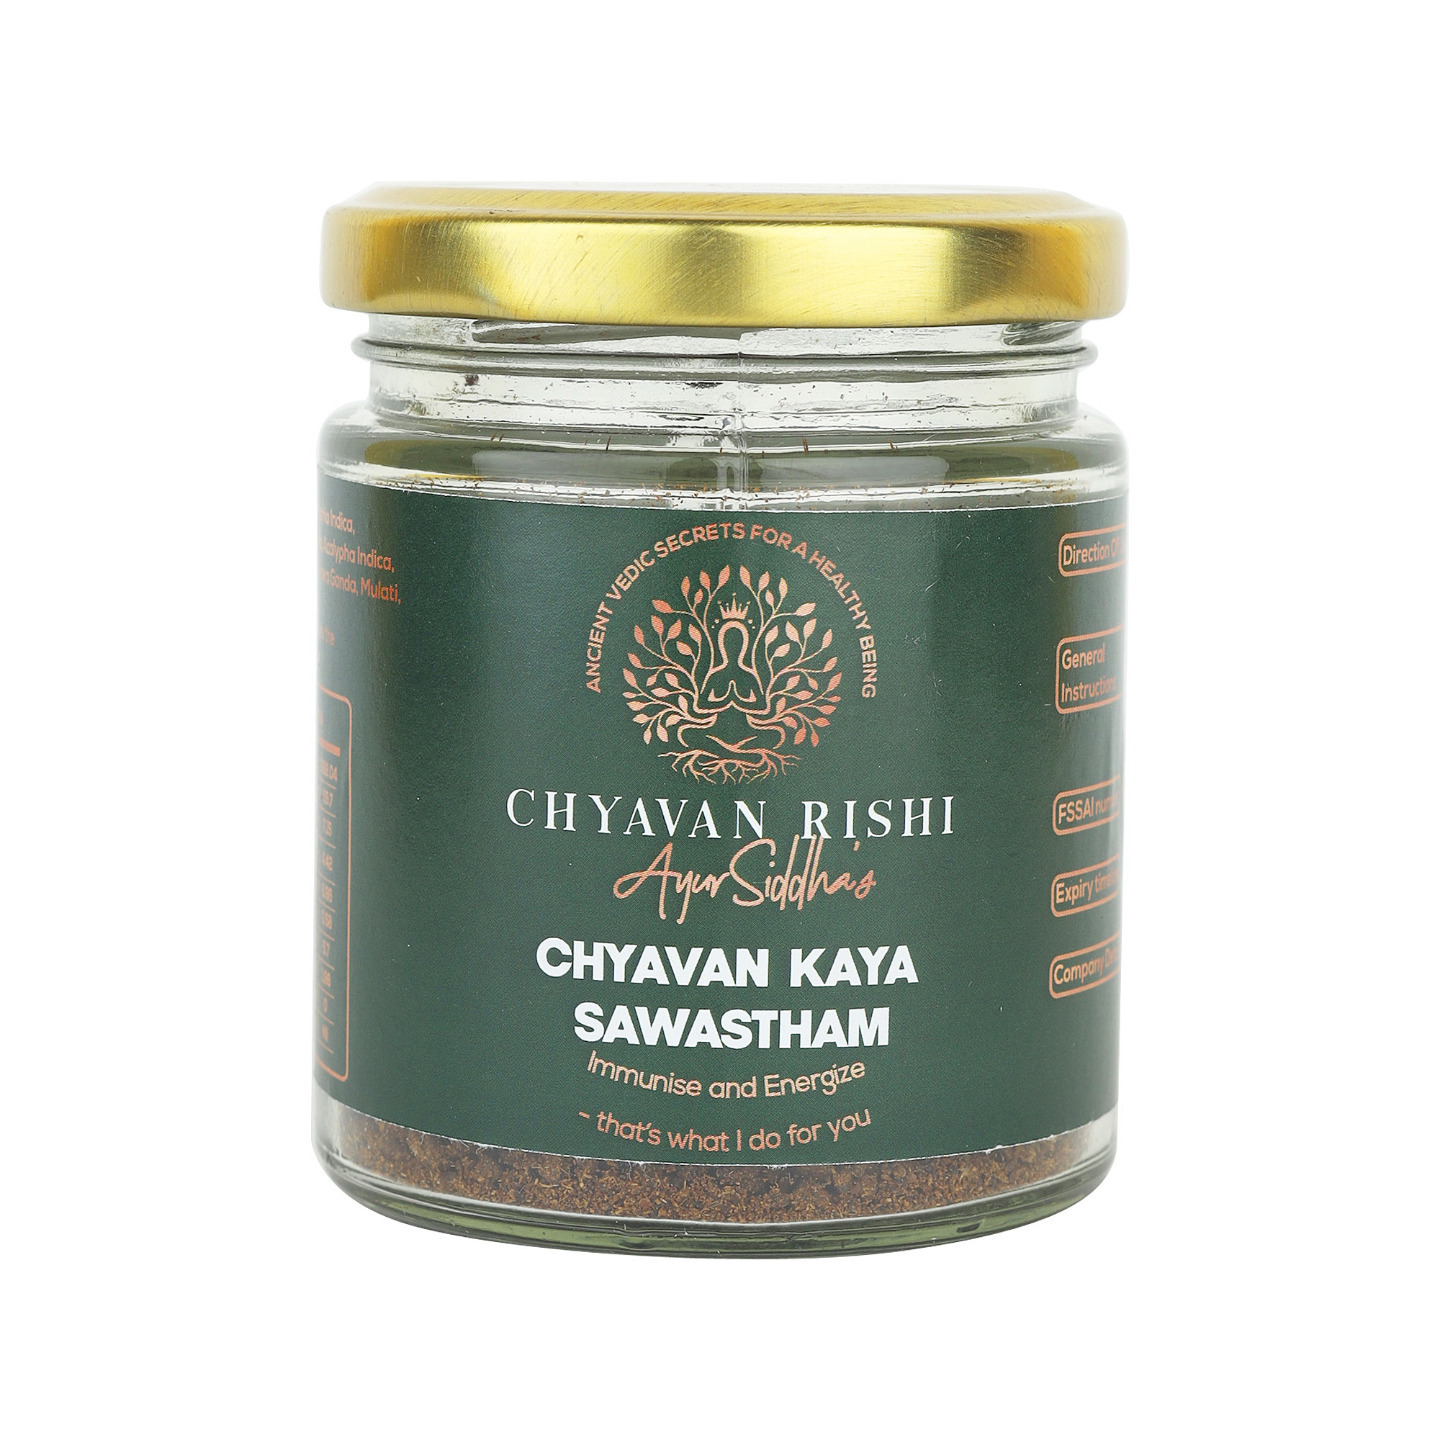 Bottle of chyavan kaya swastham - ayurvedic medicine for erectile dysfunction